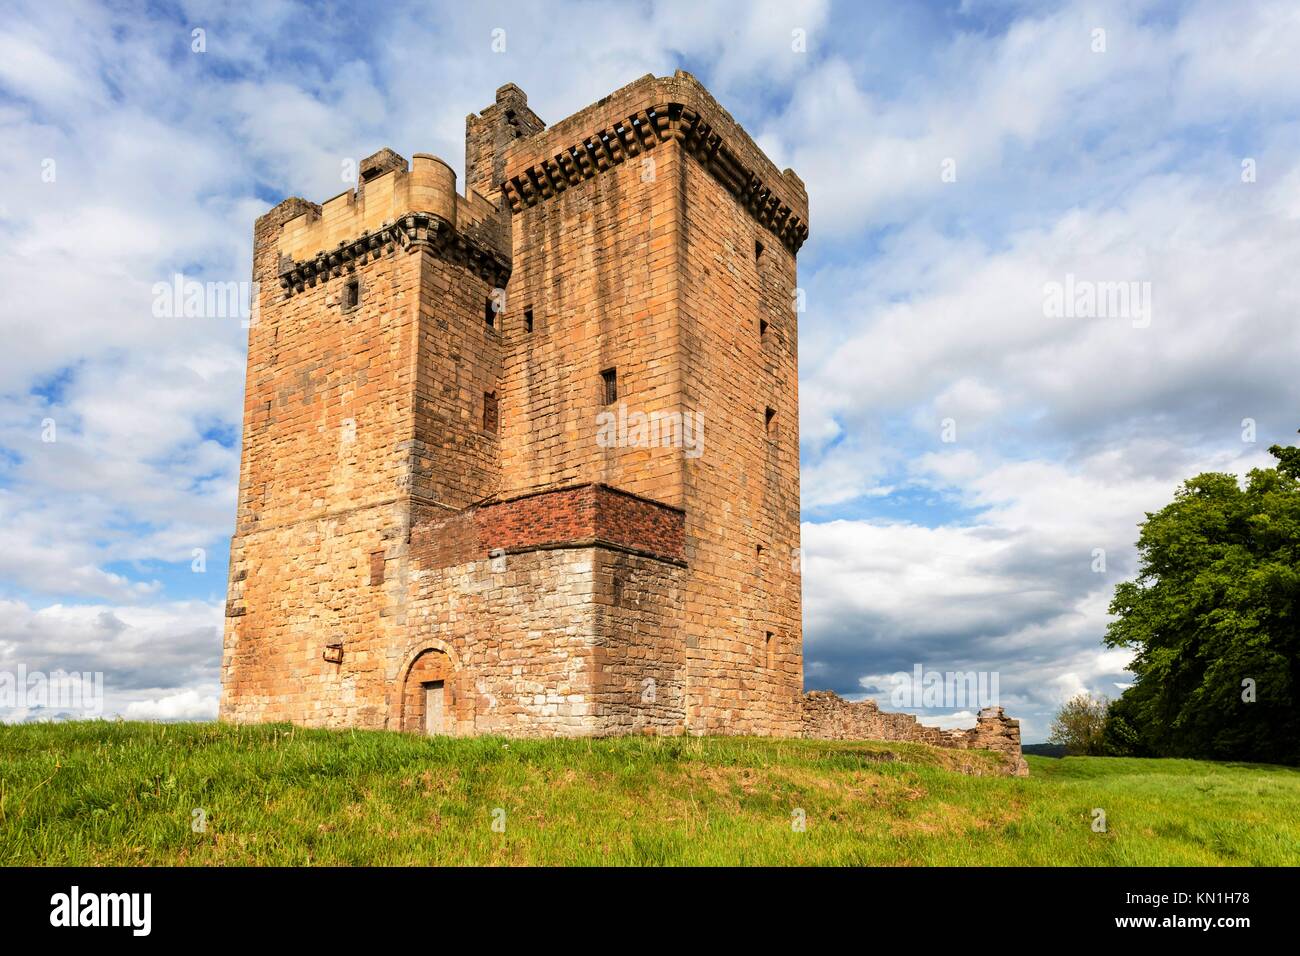 Clackmannan Tower, Clackmannanshire, Scotland. Stock Photo